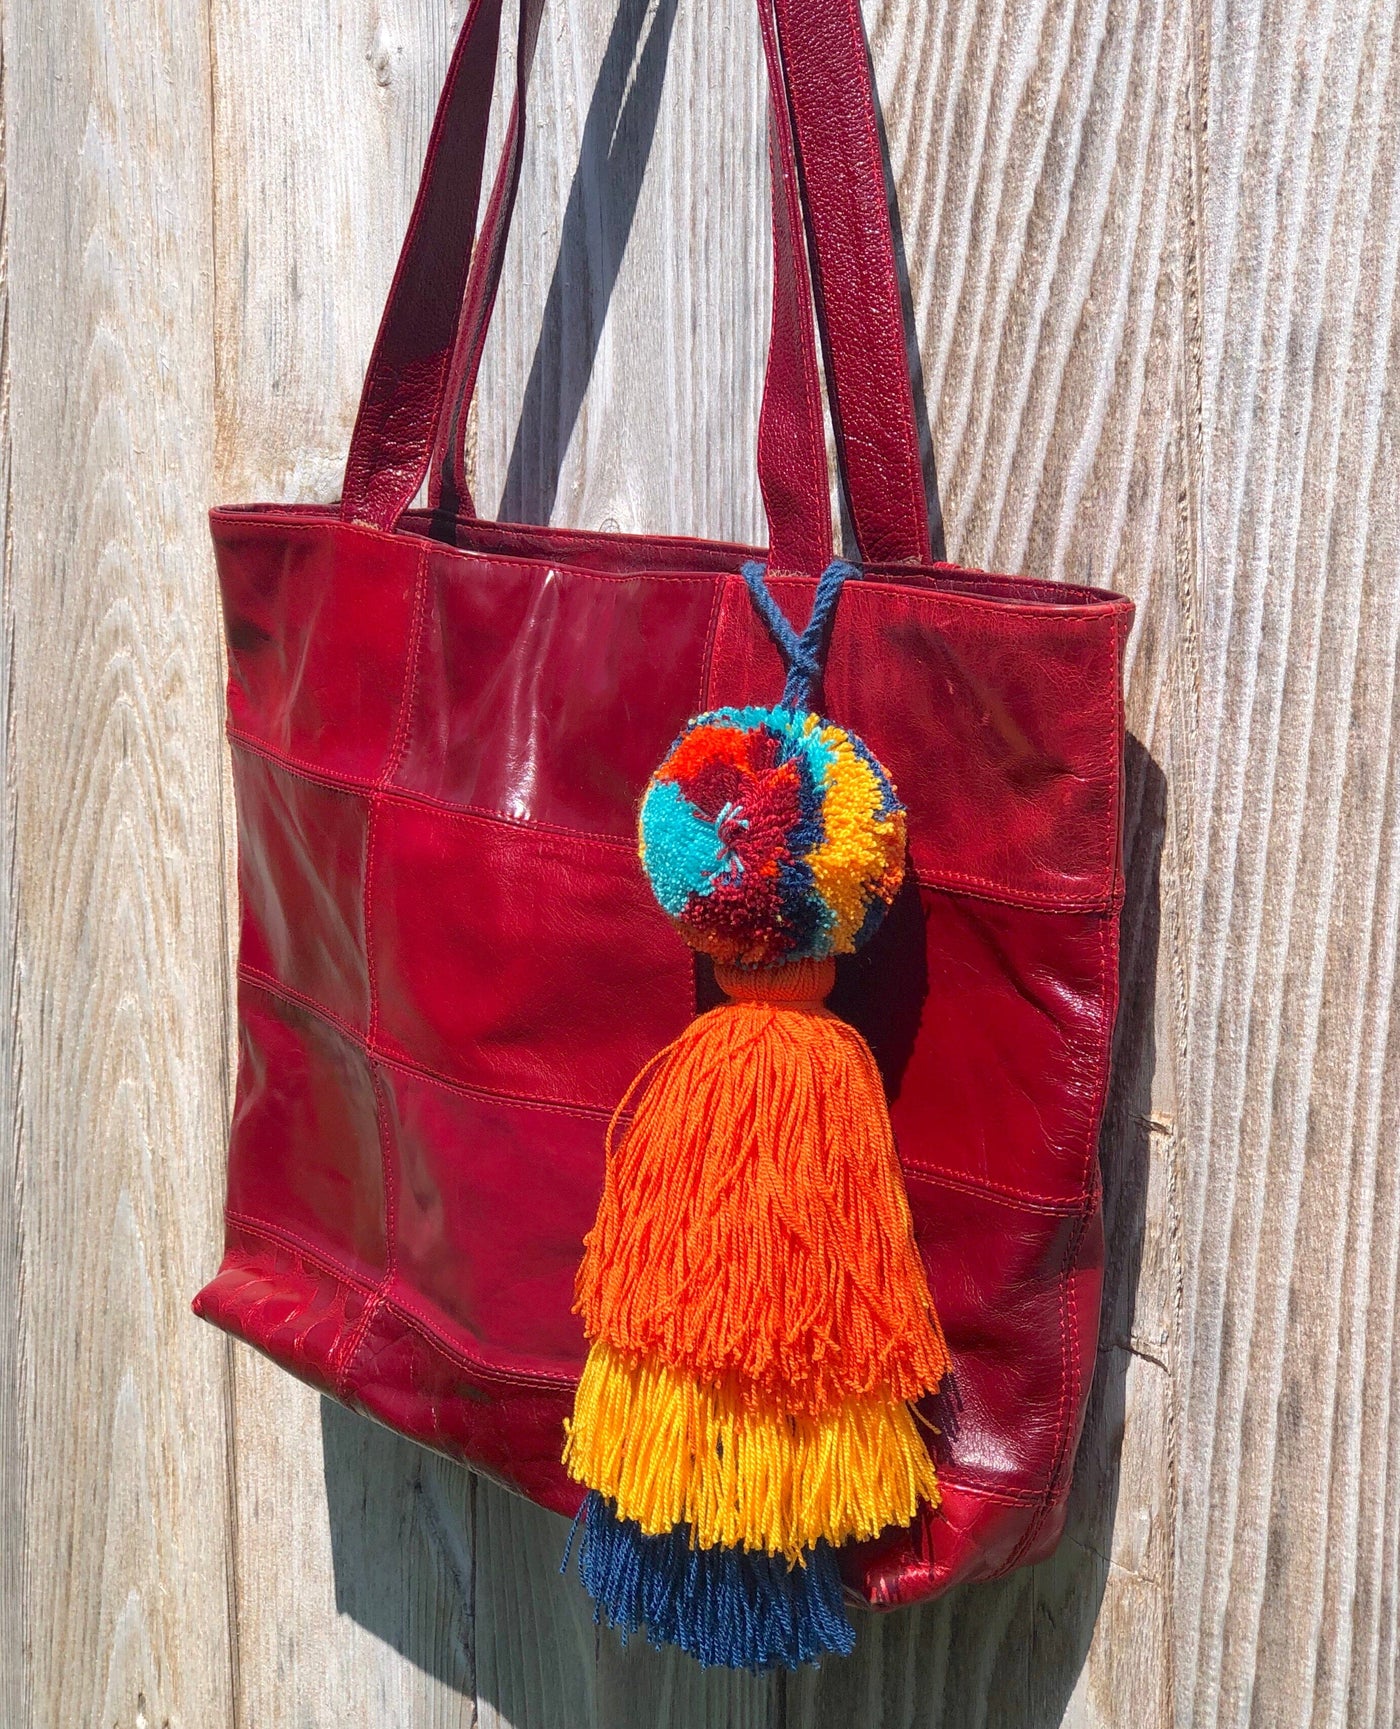 Colorful Tassel Bag Charms